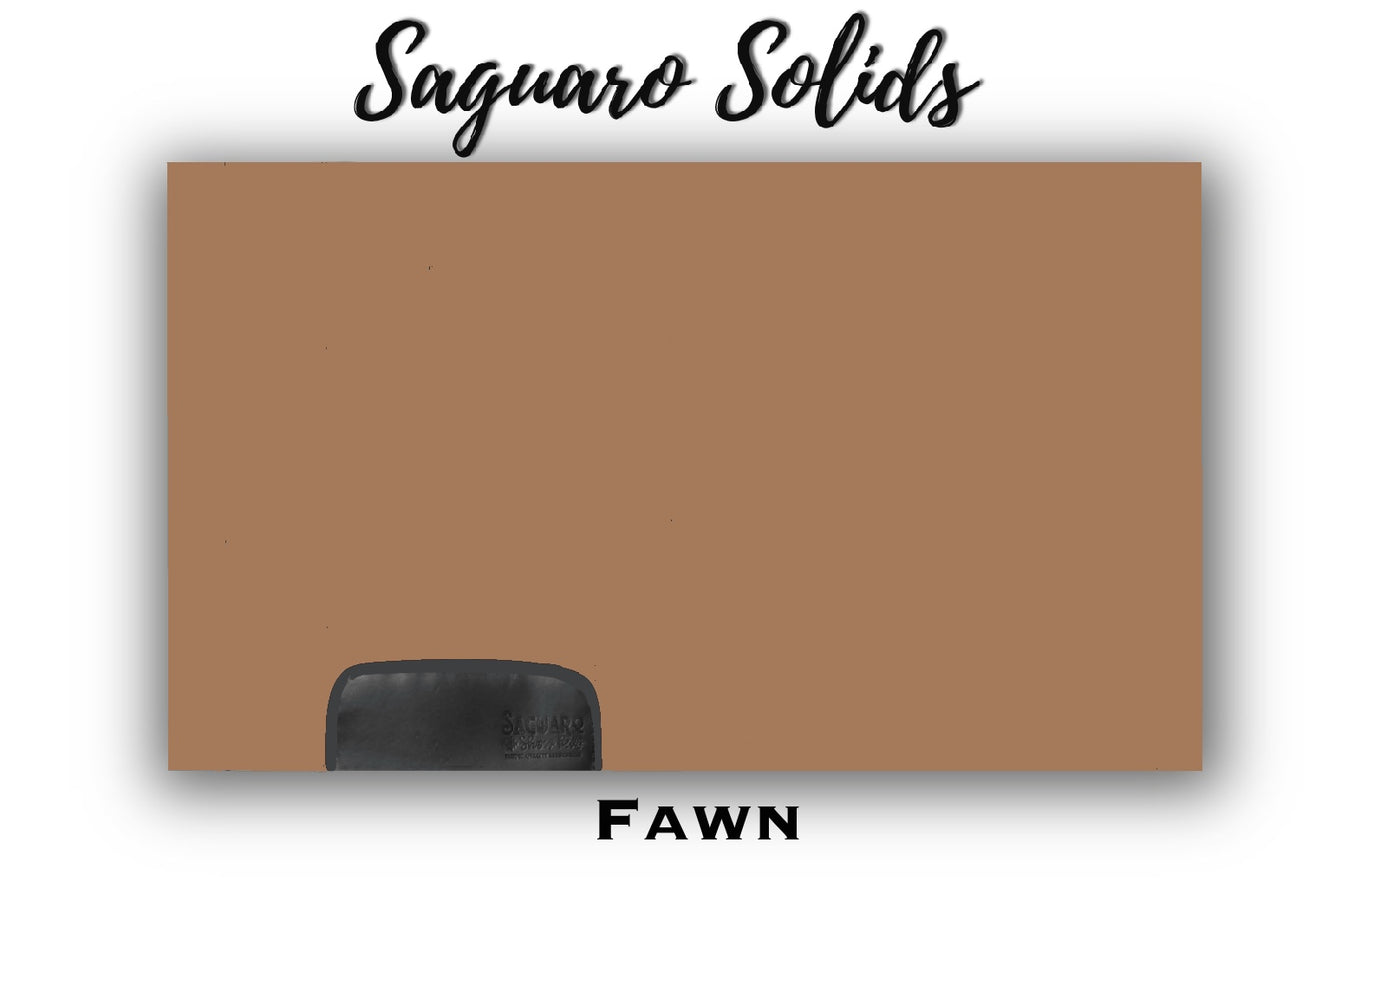 Saguaro Solid "Fawn" Show Pad (SEMI-CUSTOM)